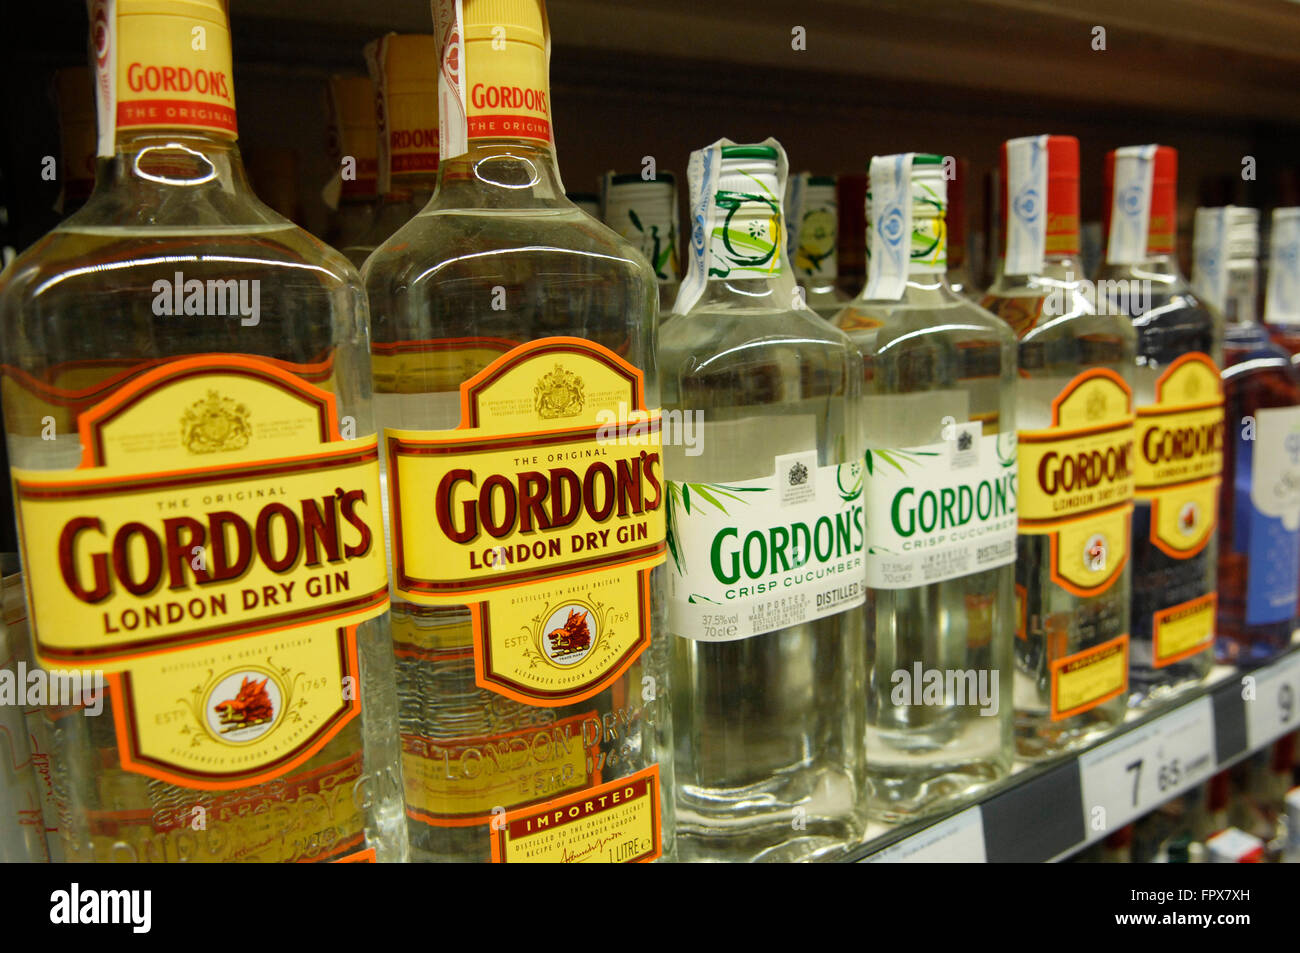 Gordon's London Dry Gin on display at a Carrefour Supermarket Malaga Spain  Stock Photo - Alamy